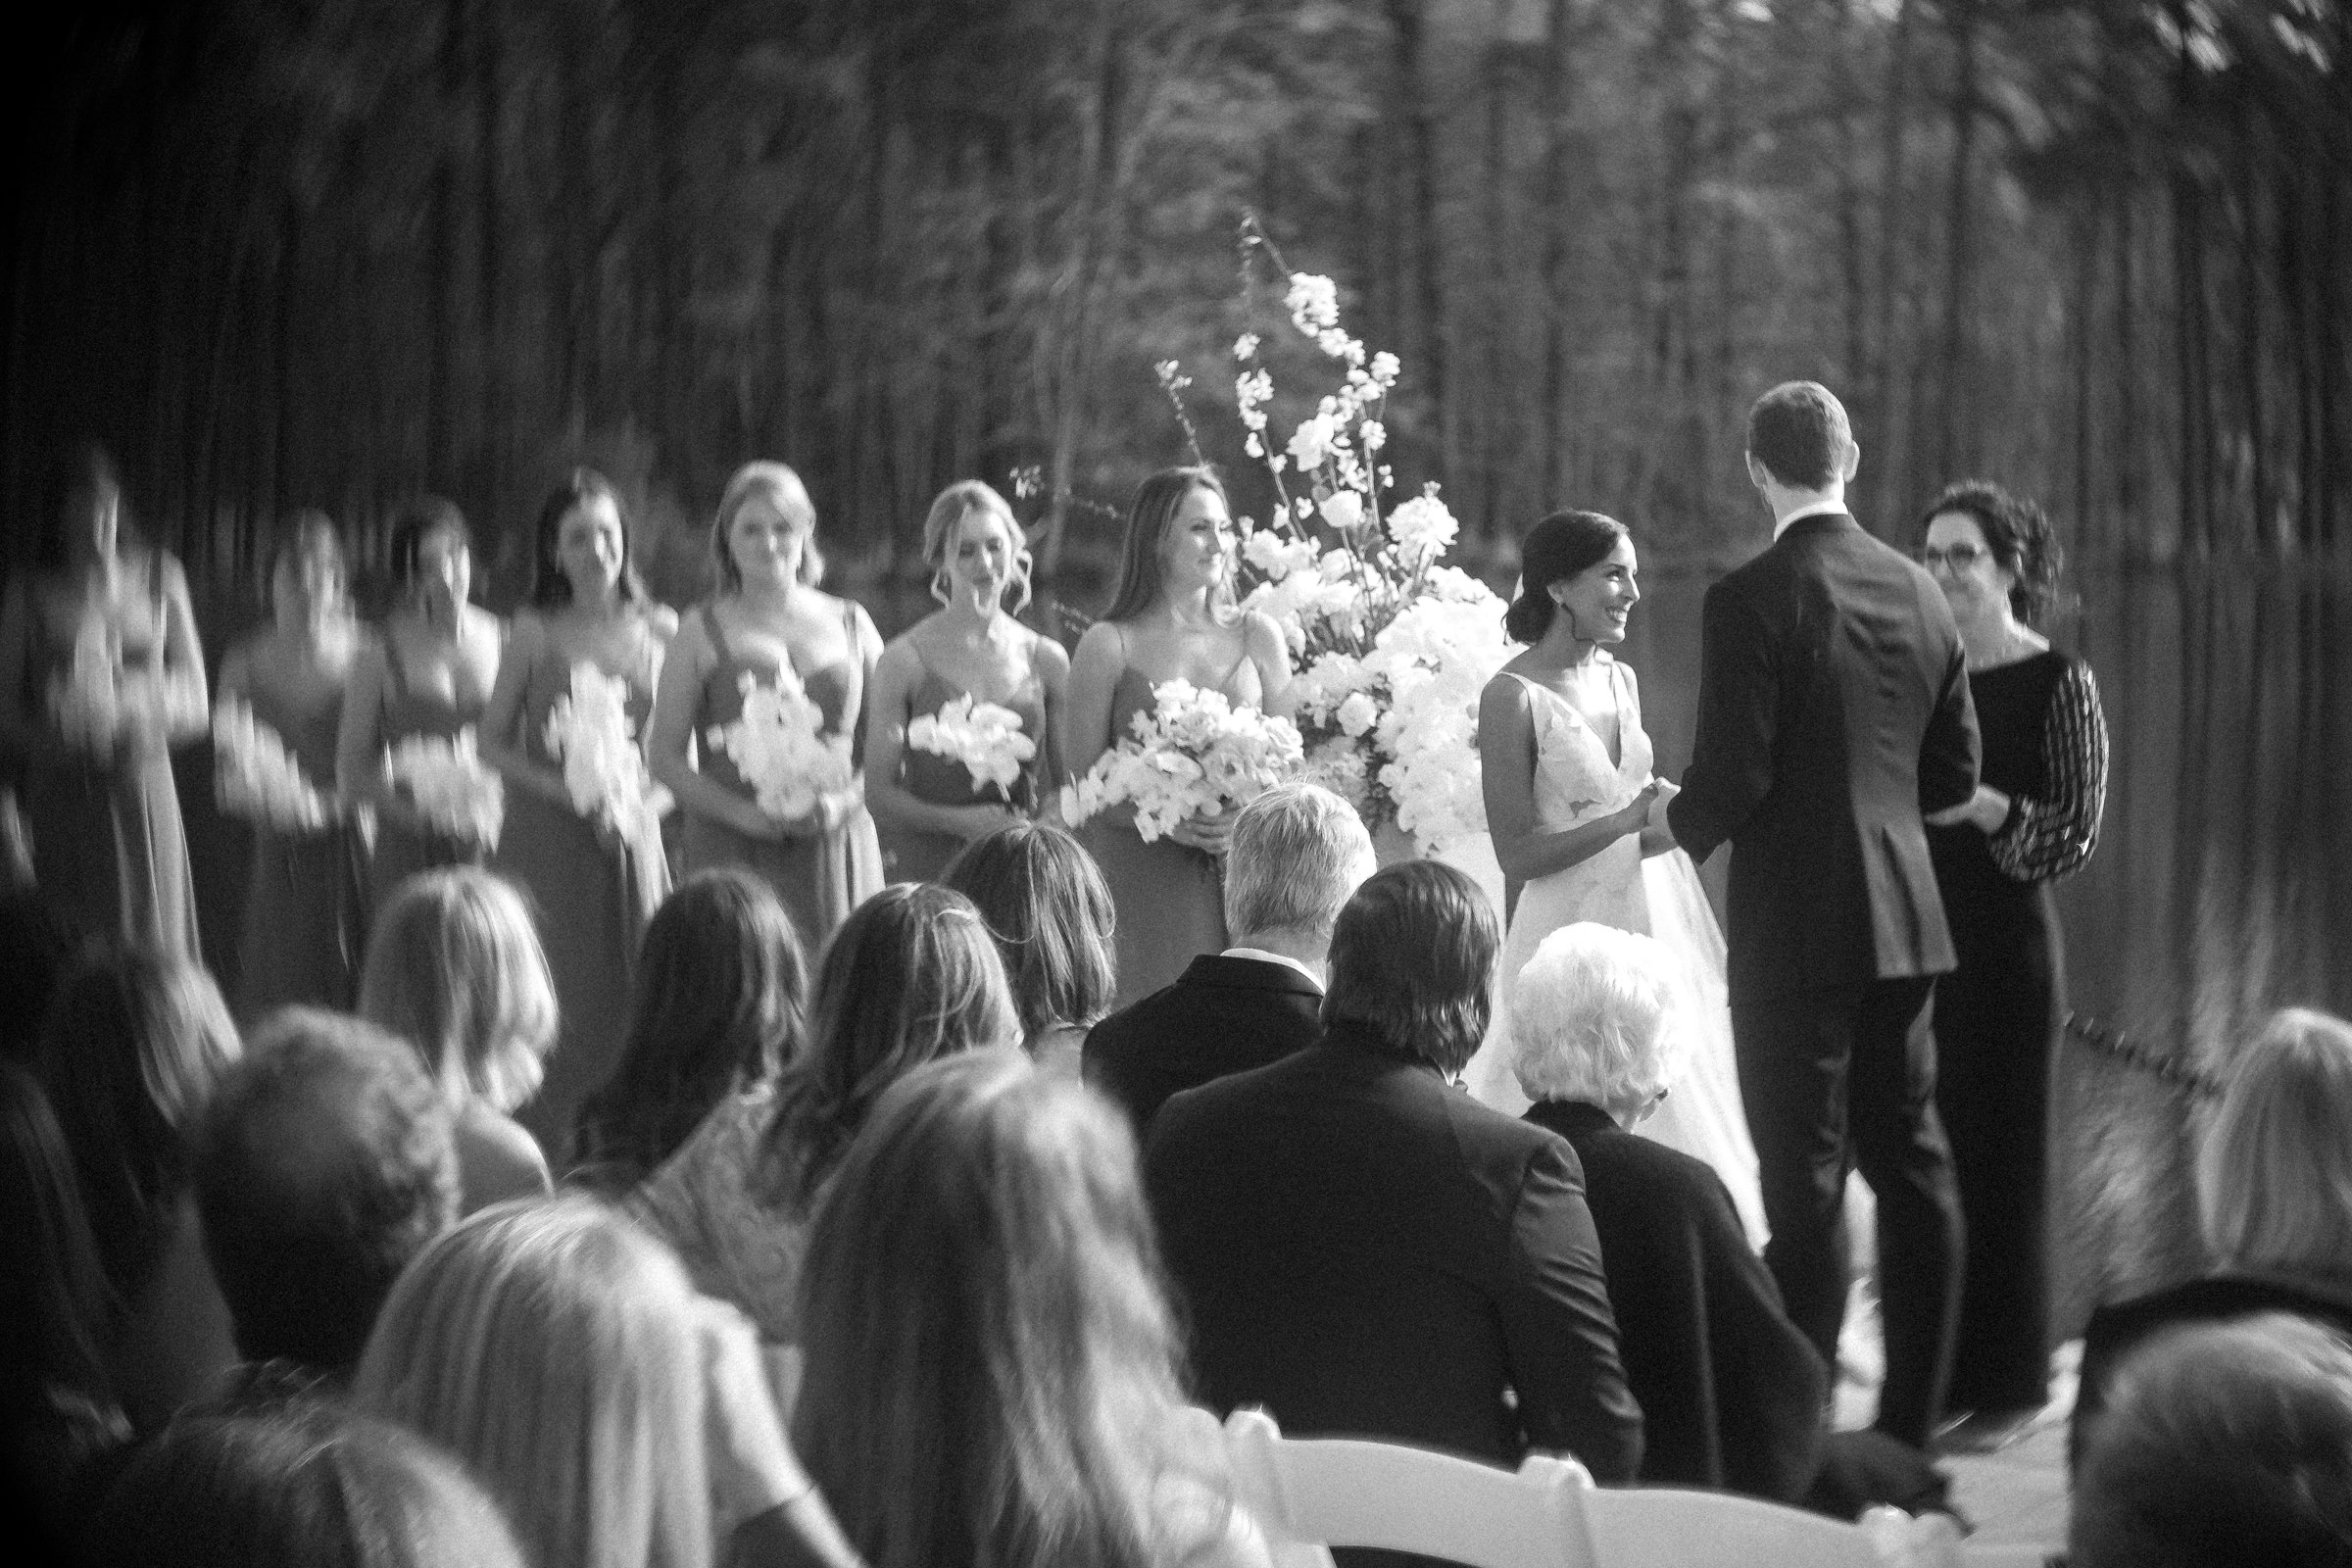 angus barn wedding photographer - meghan & watts